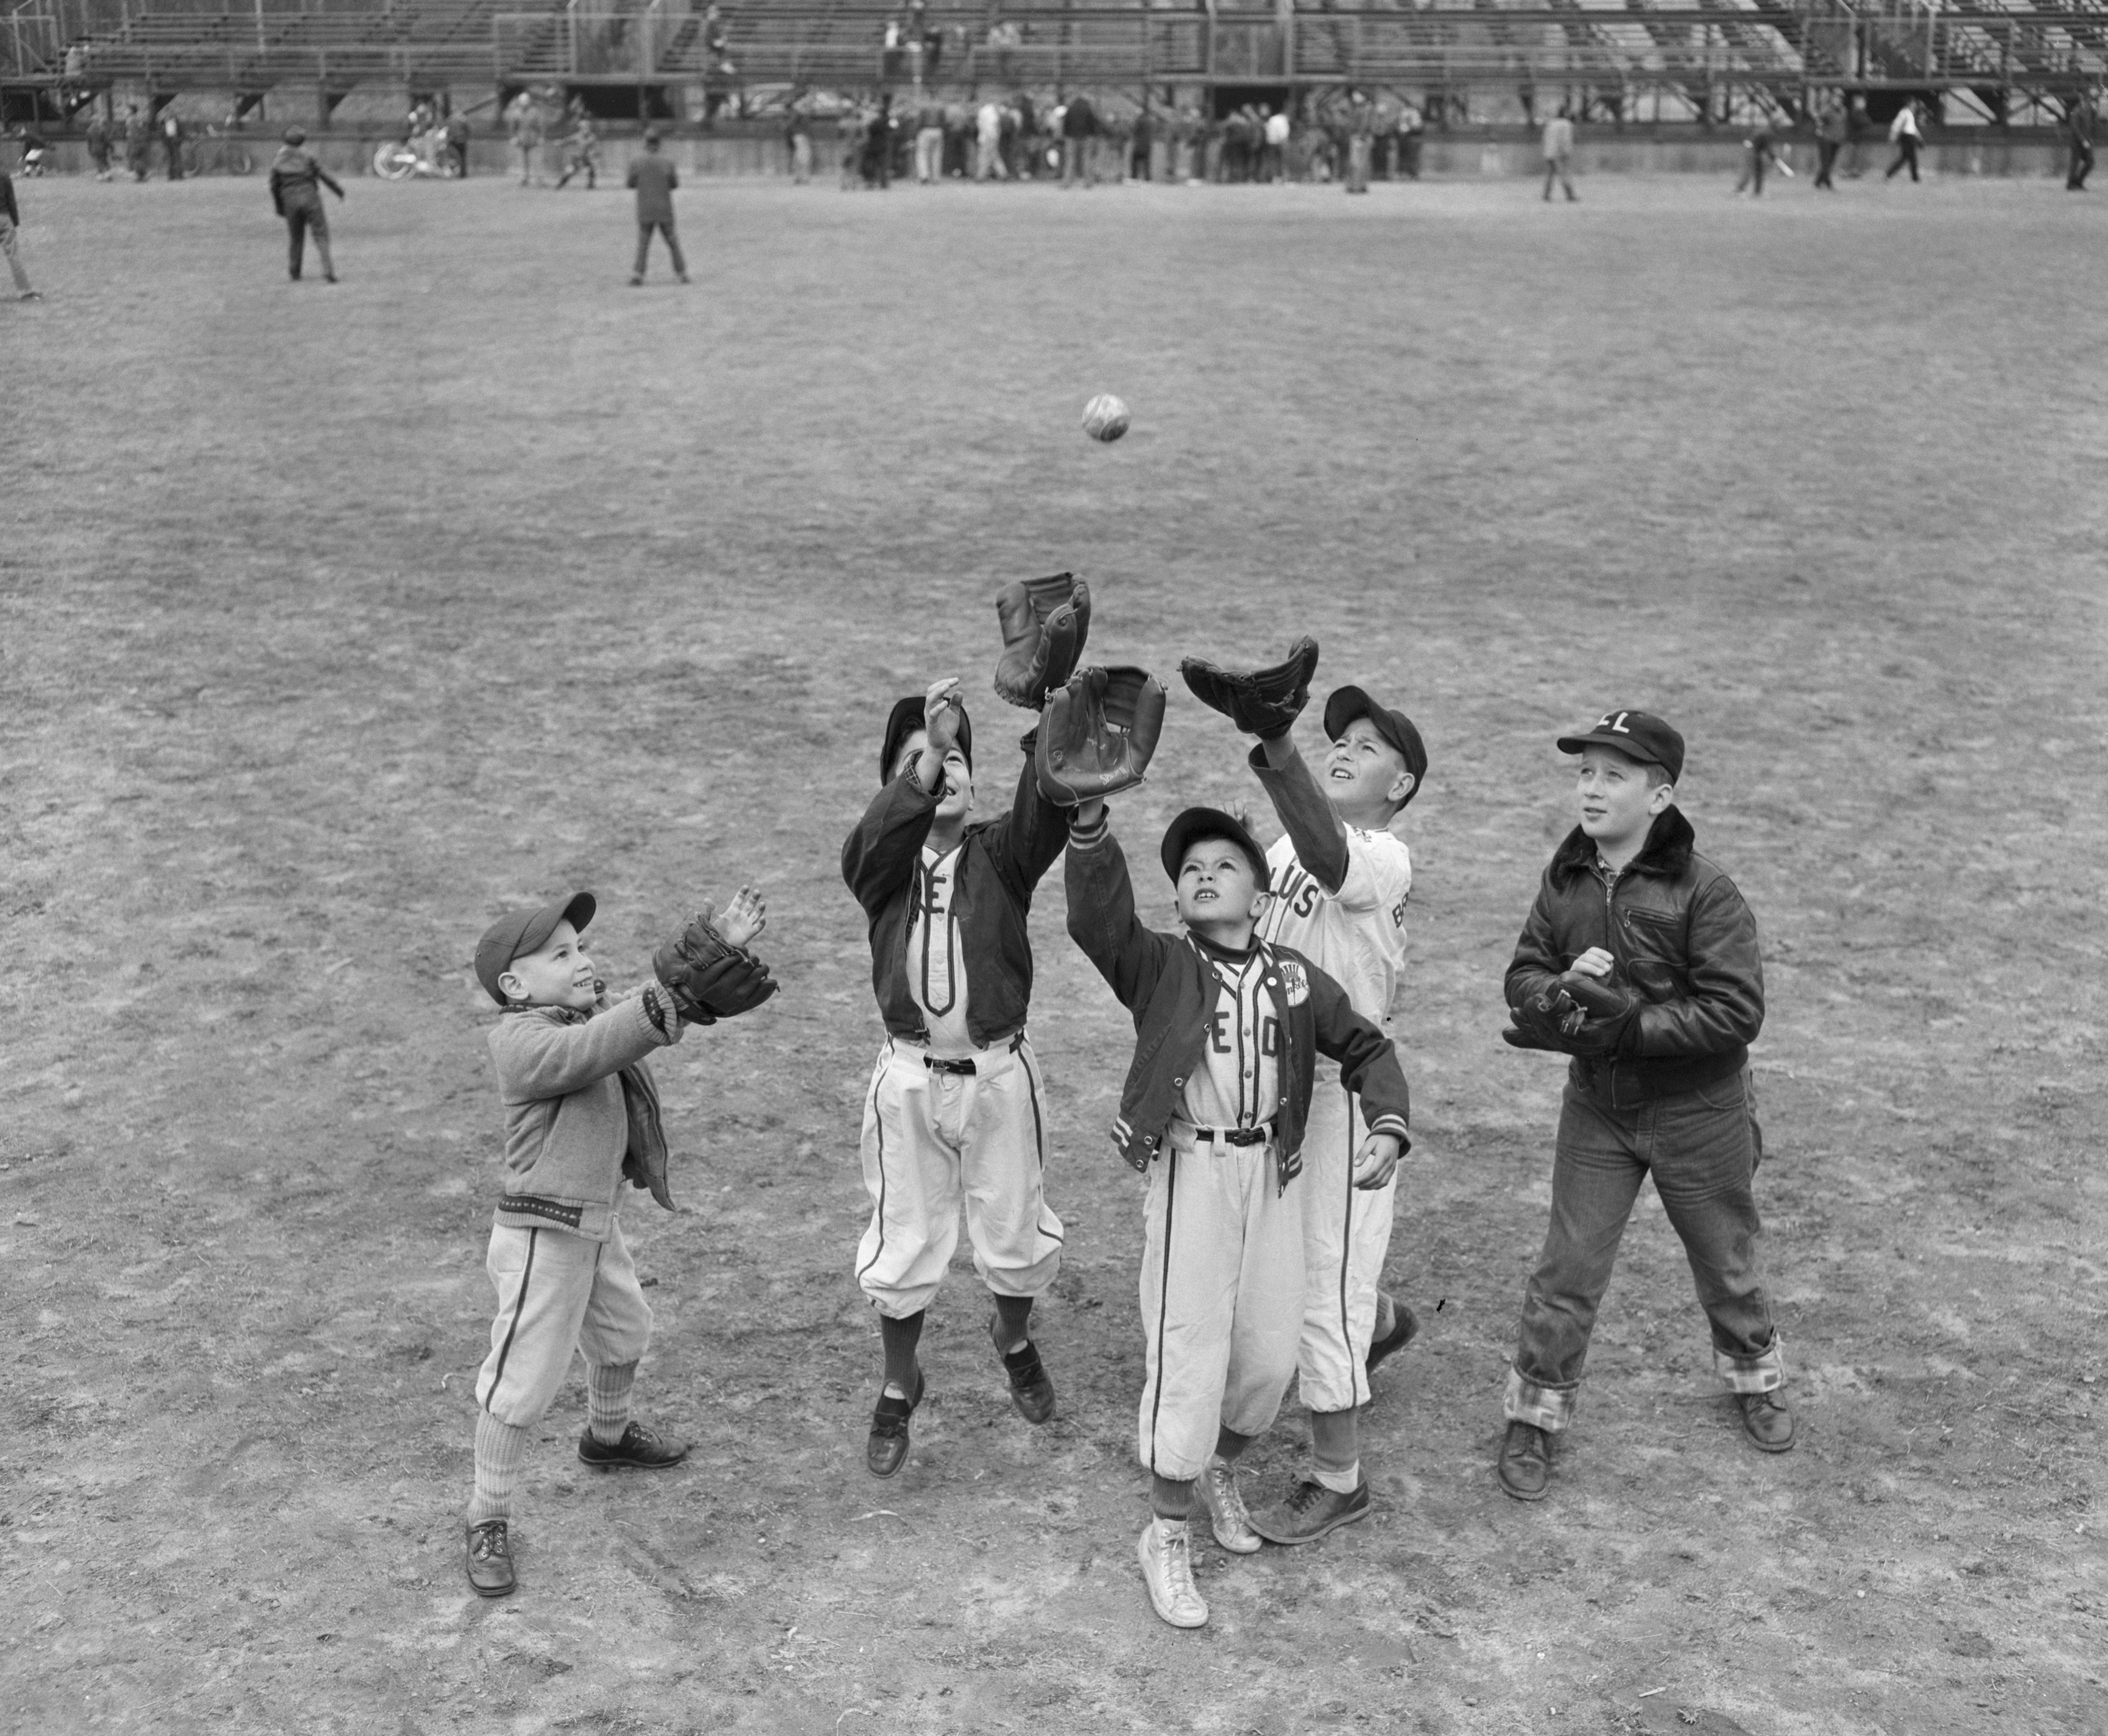 Boys Trying to Catch Softball